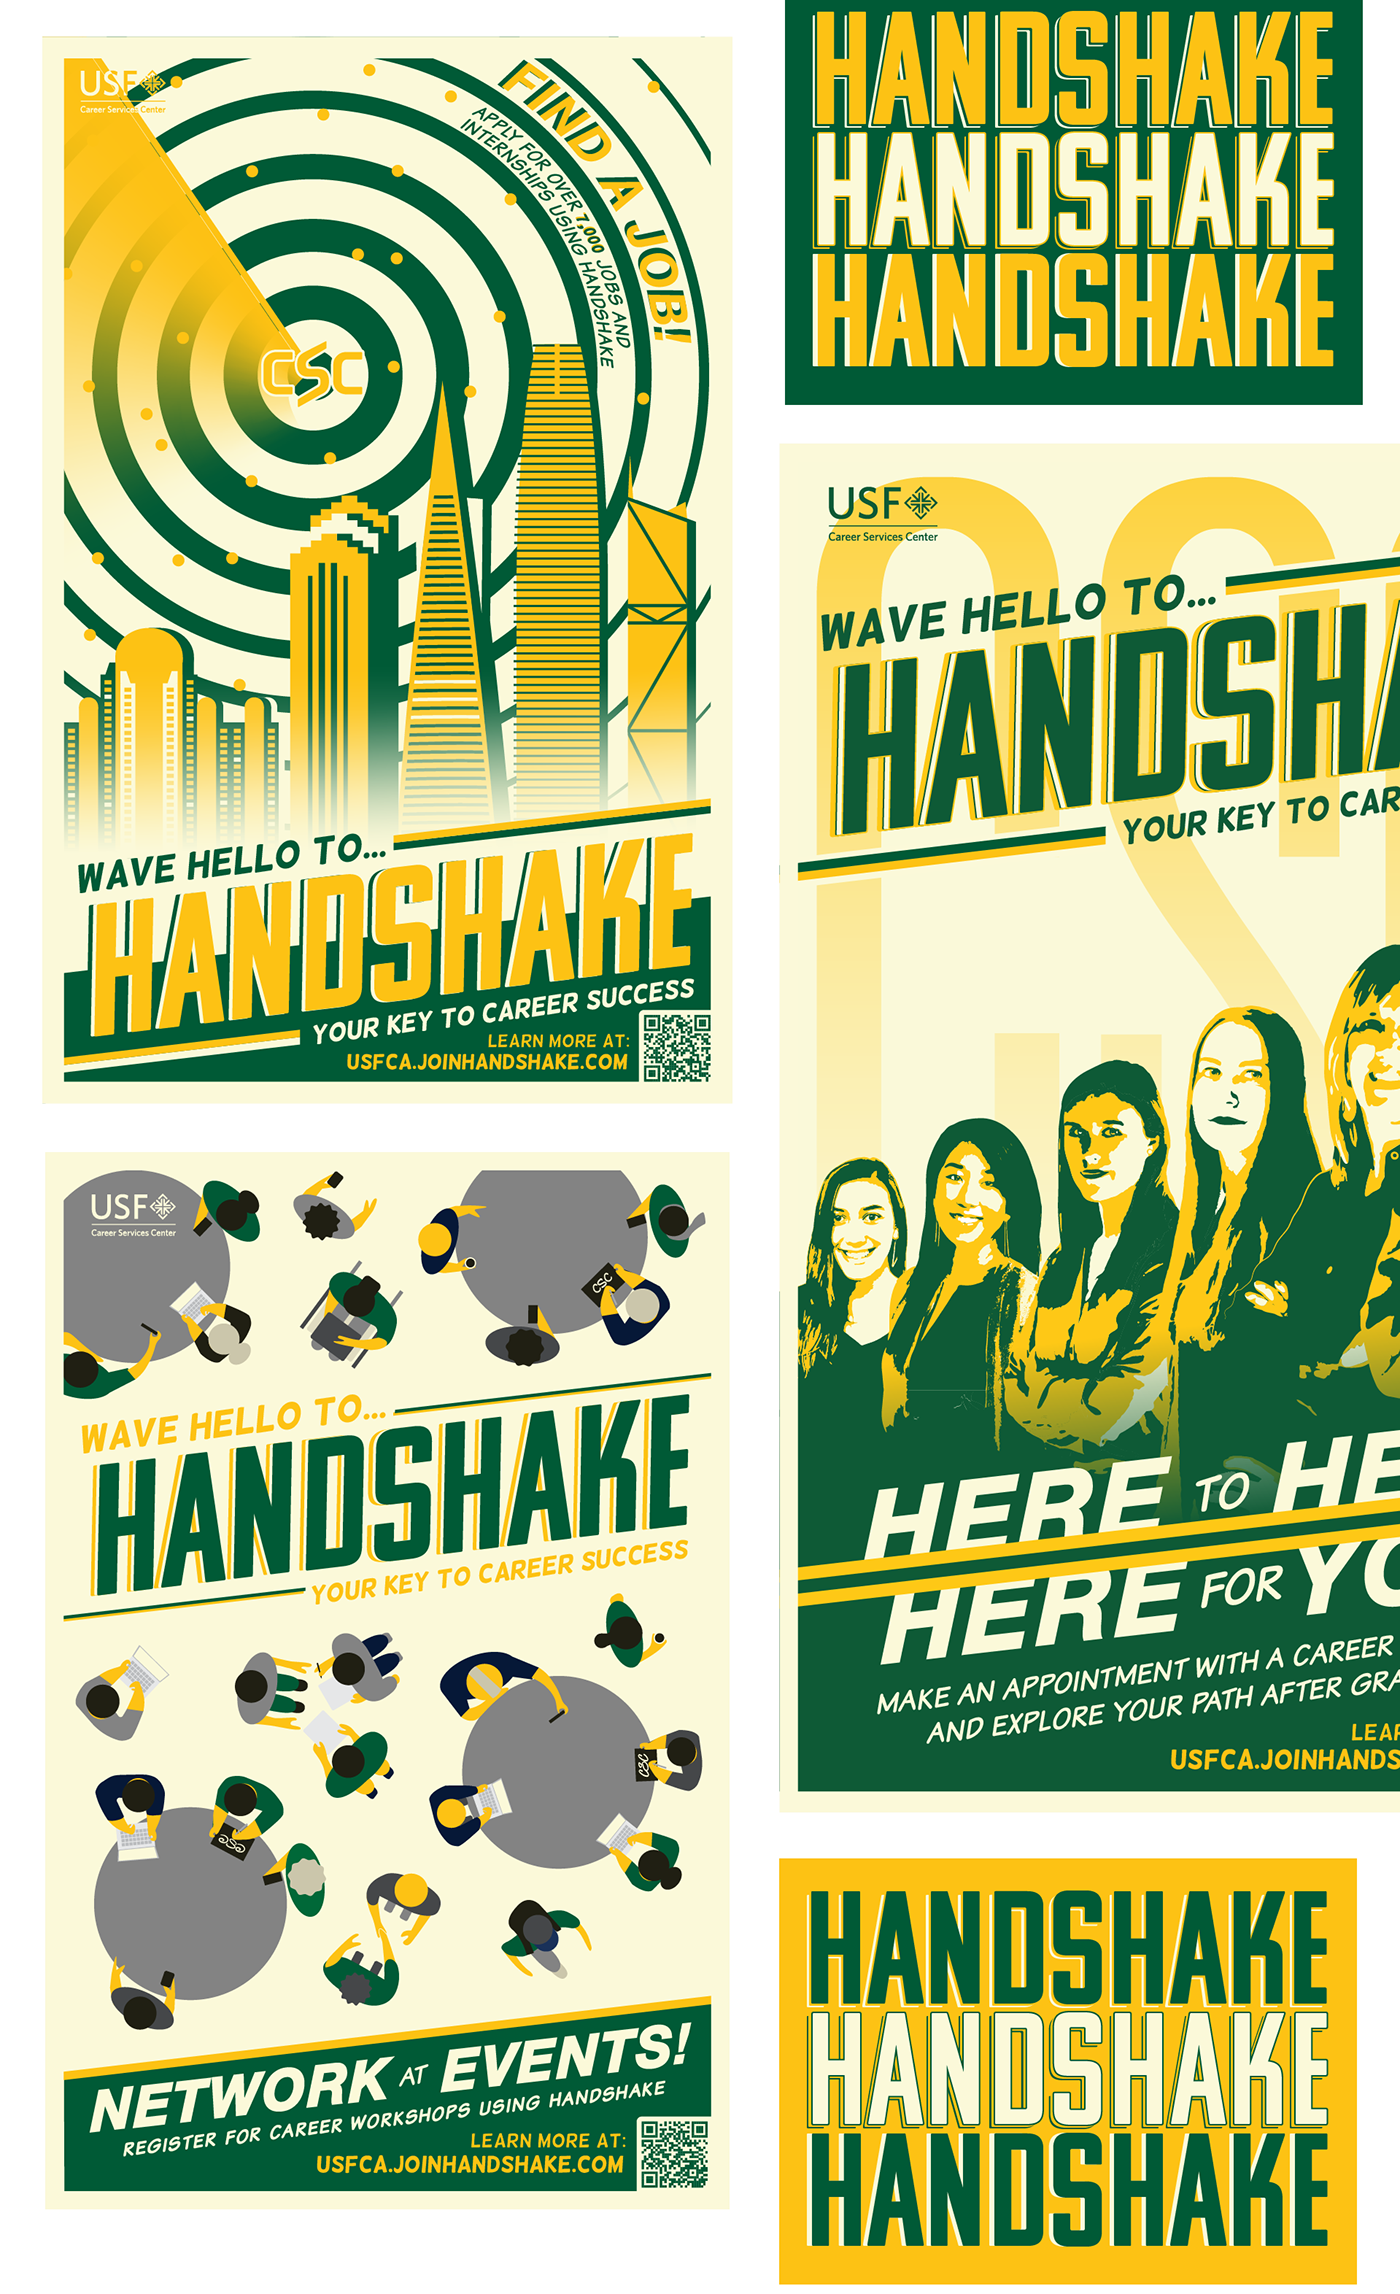 adobeawards Career Center University posters handshake career branding Careers